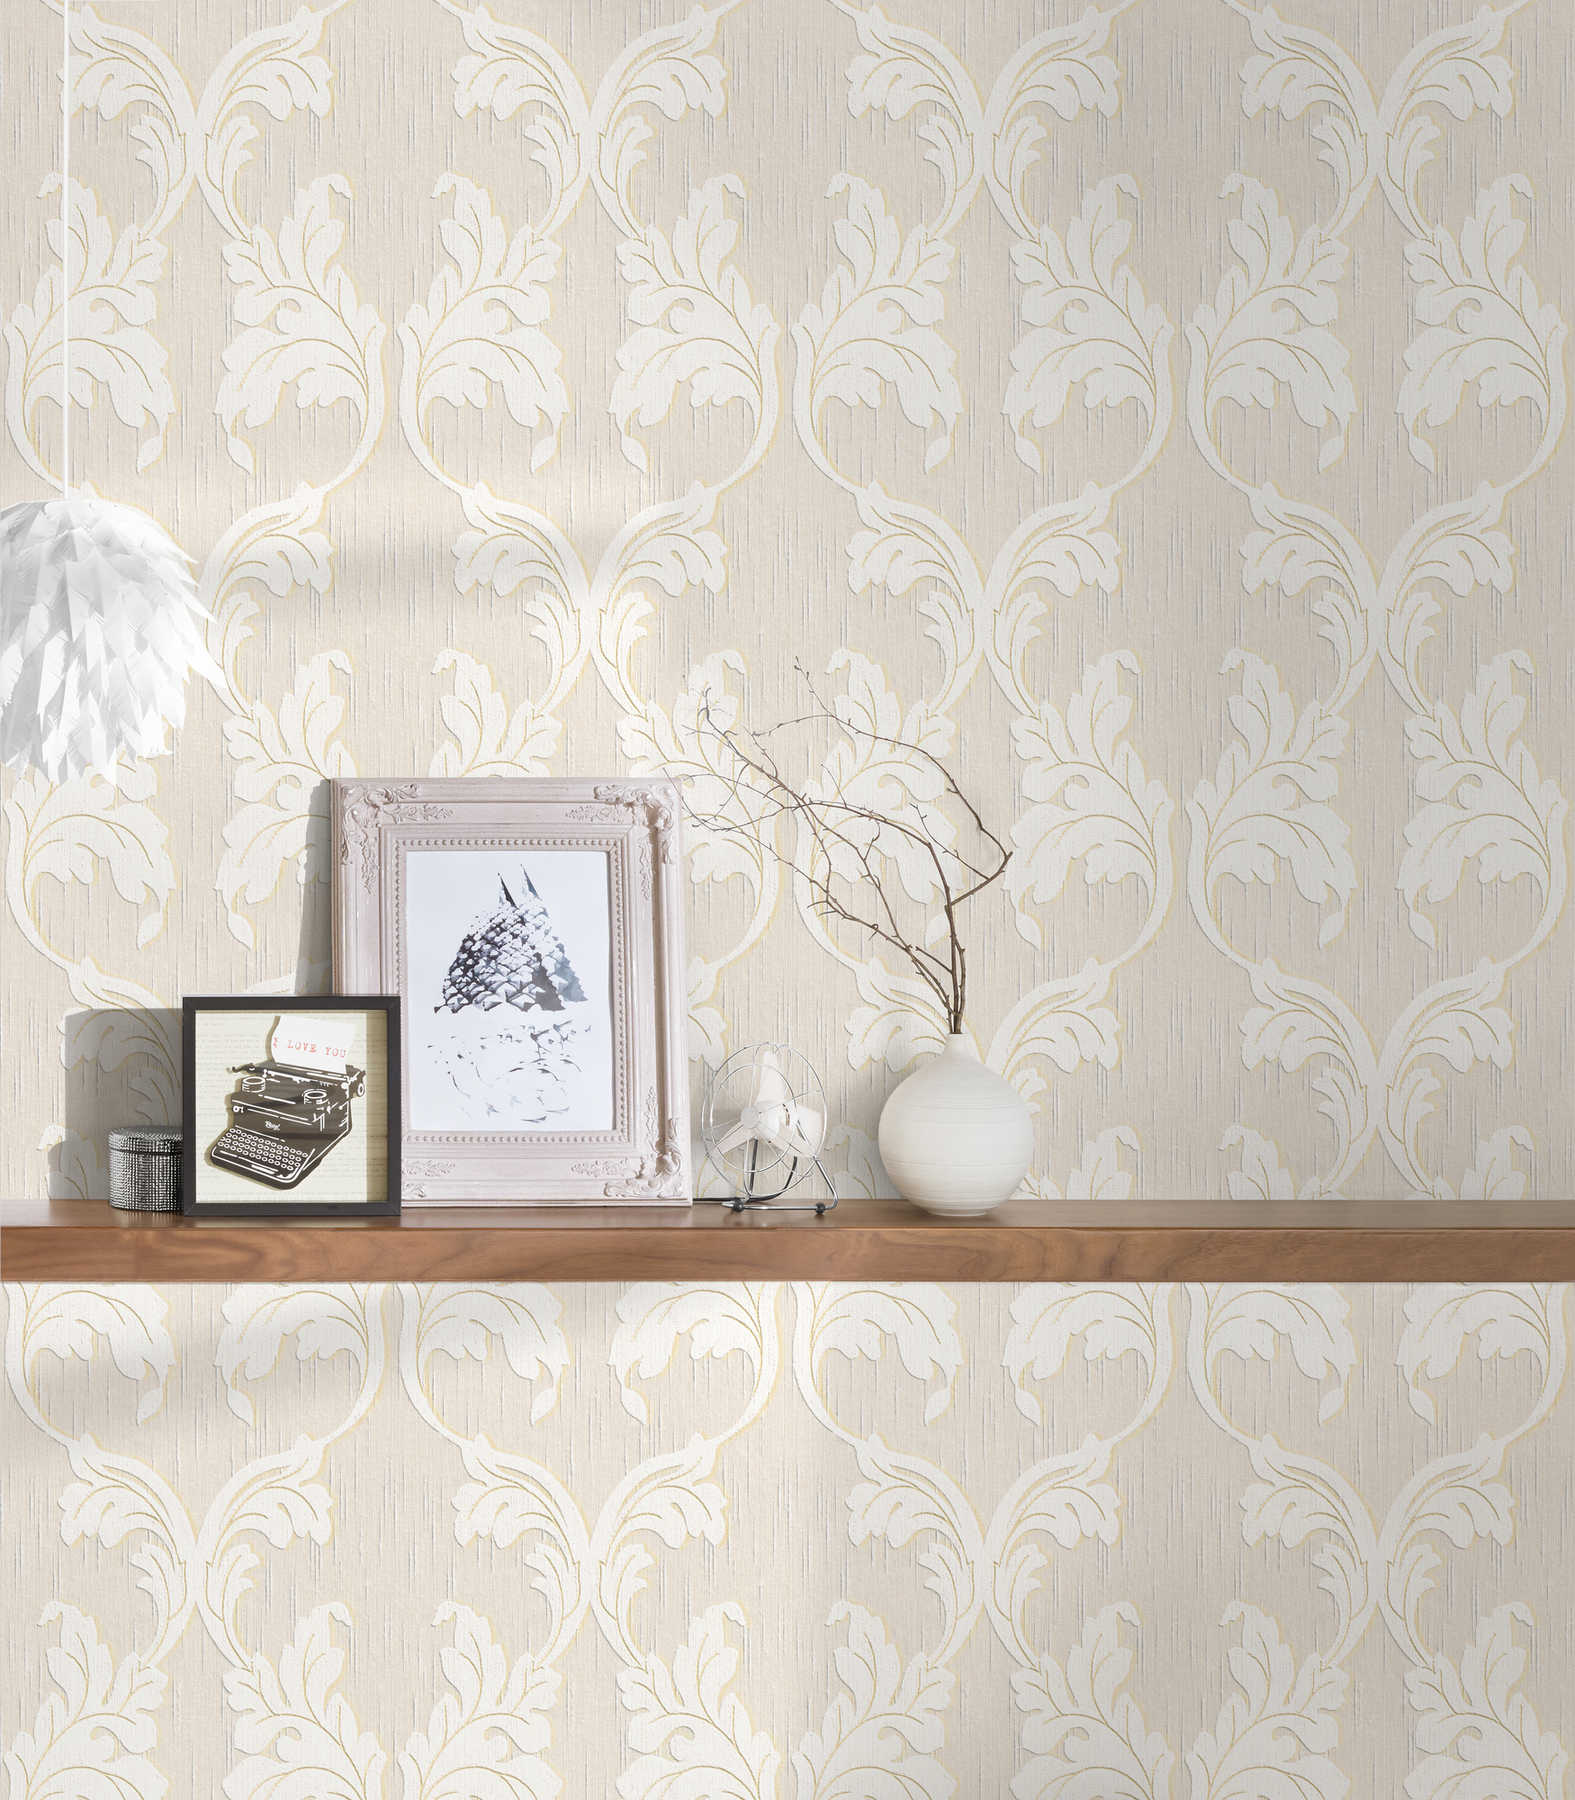             Premium textile wallpaper with ornament vines - beige, cream, gold
        